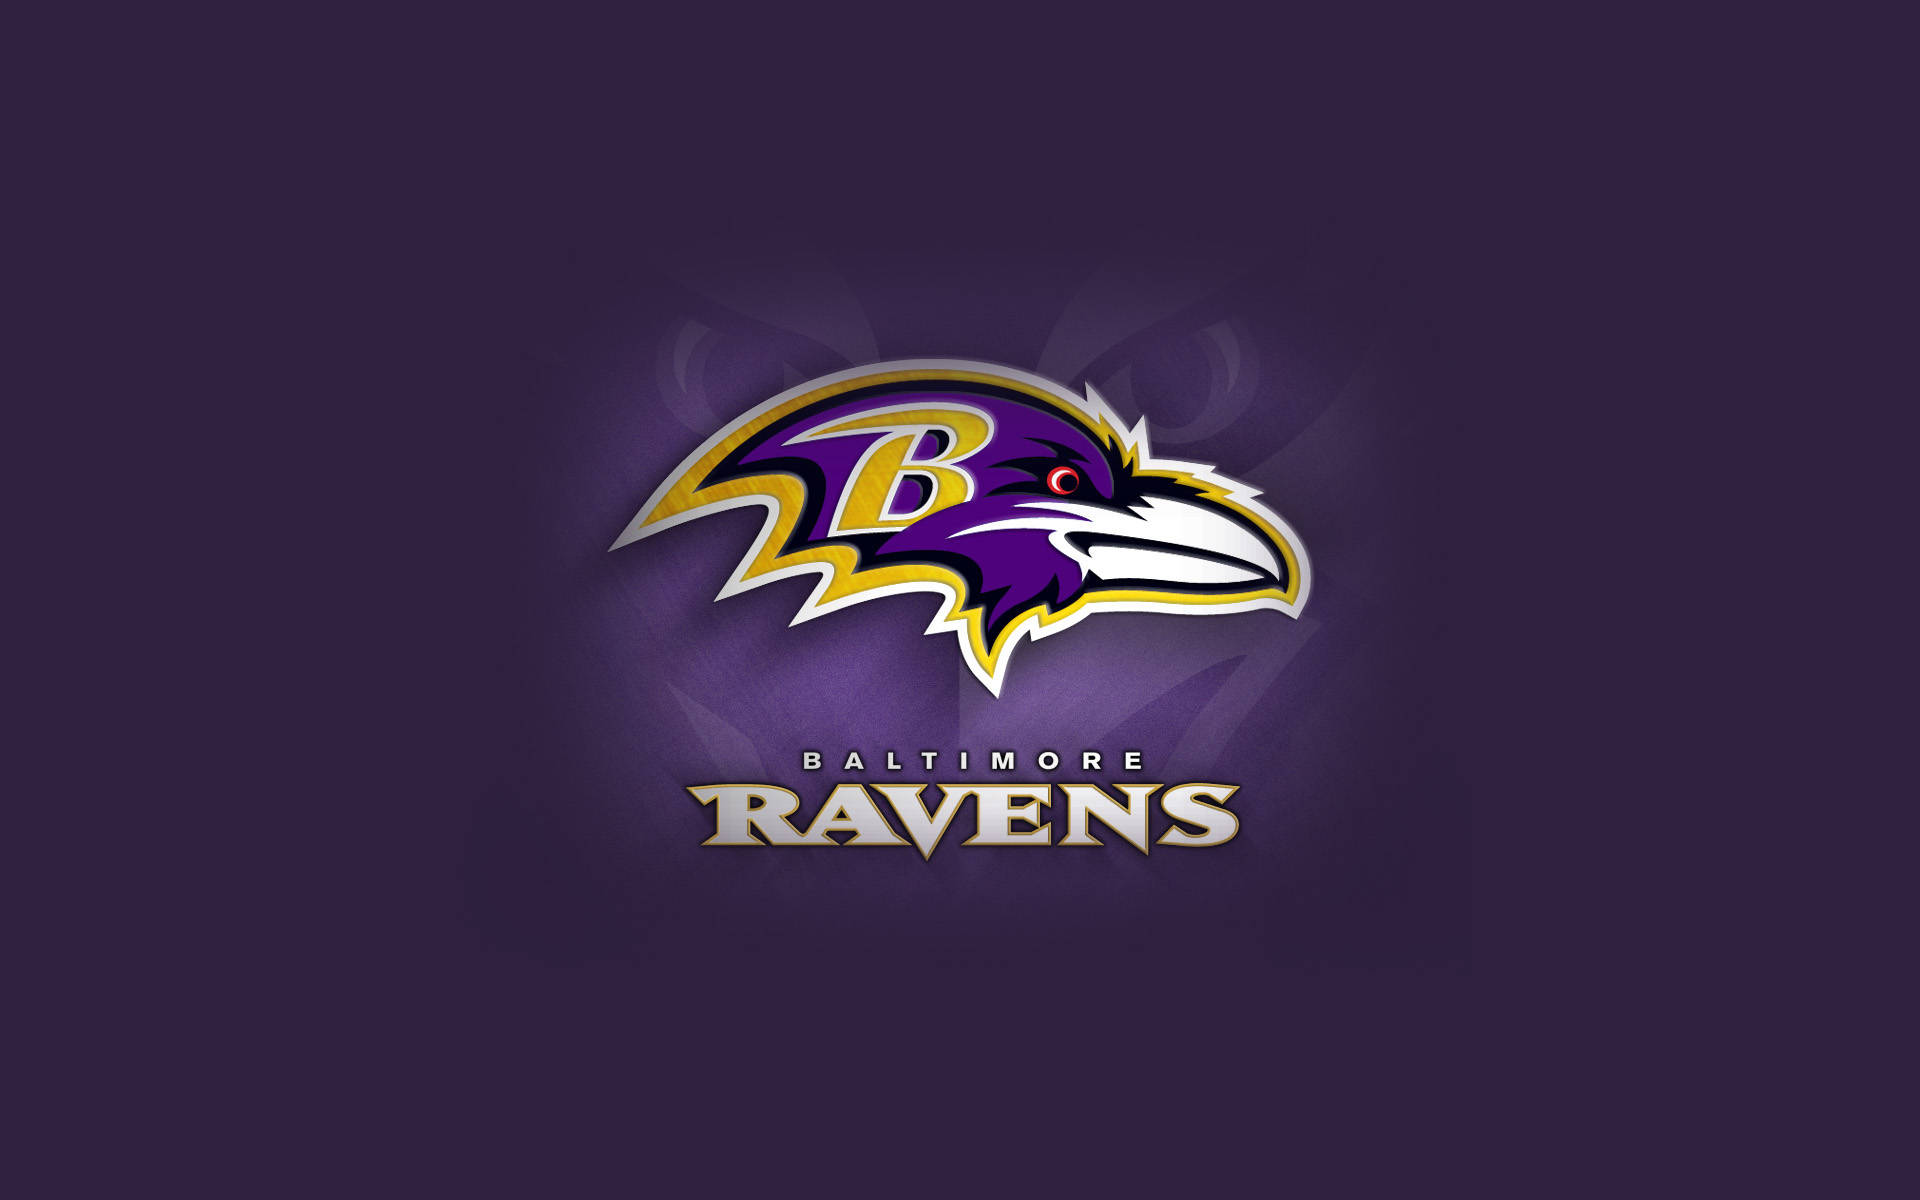 Baltimore Ravens Football Team's Logo Wallpaper